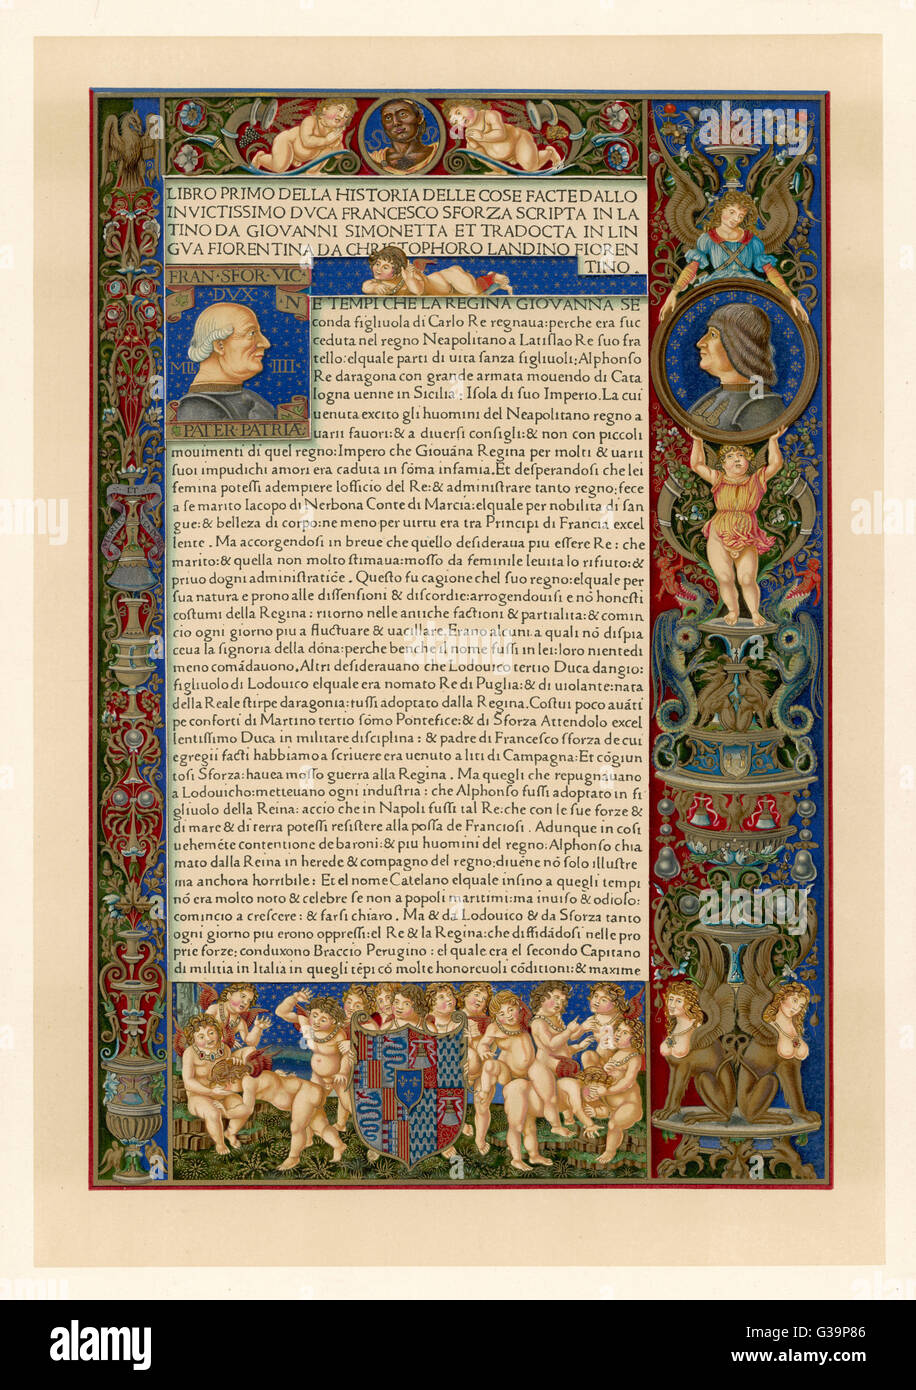 Eine Seite aus Simonettas Historia Delle Cose Gesicht Dallo Invictissimo Duca Francesco Sforza - italienischen Manuskript Datum: 1490 Stockfoto